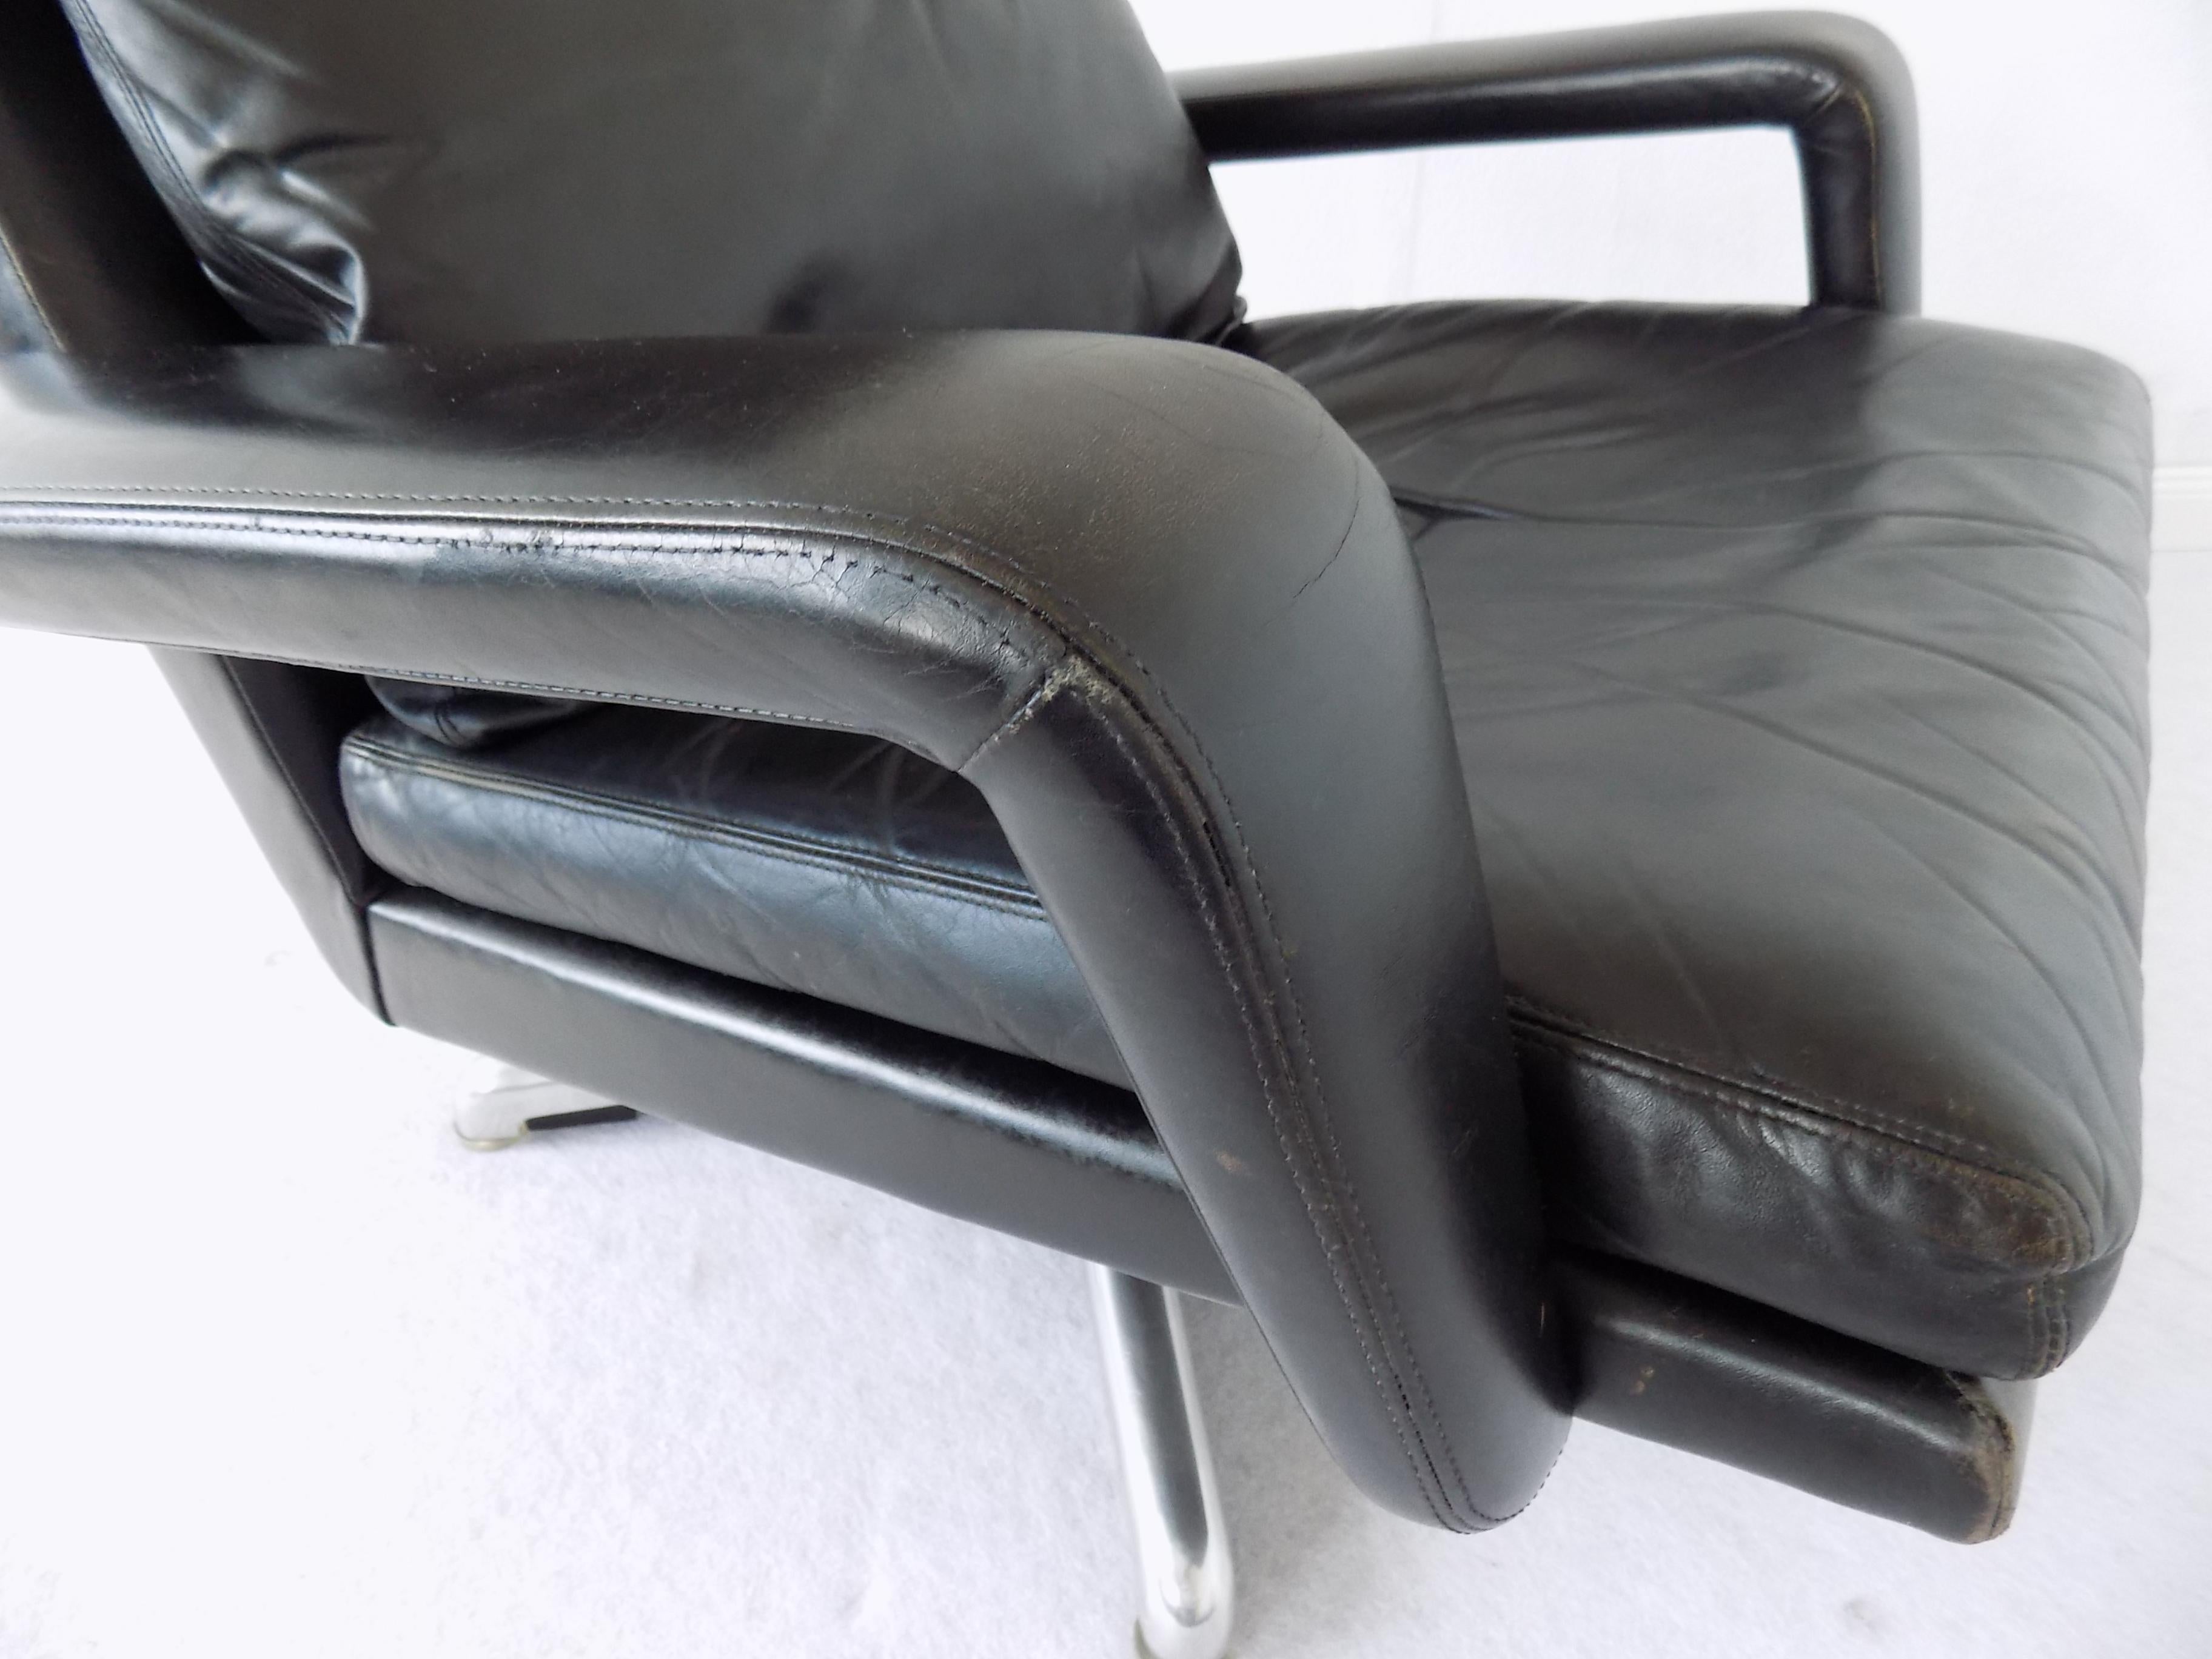 Hans Kaufeld Lounge Chair, German, Black leather, mid-century modern, swivel For Sale 7